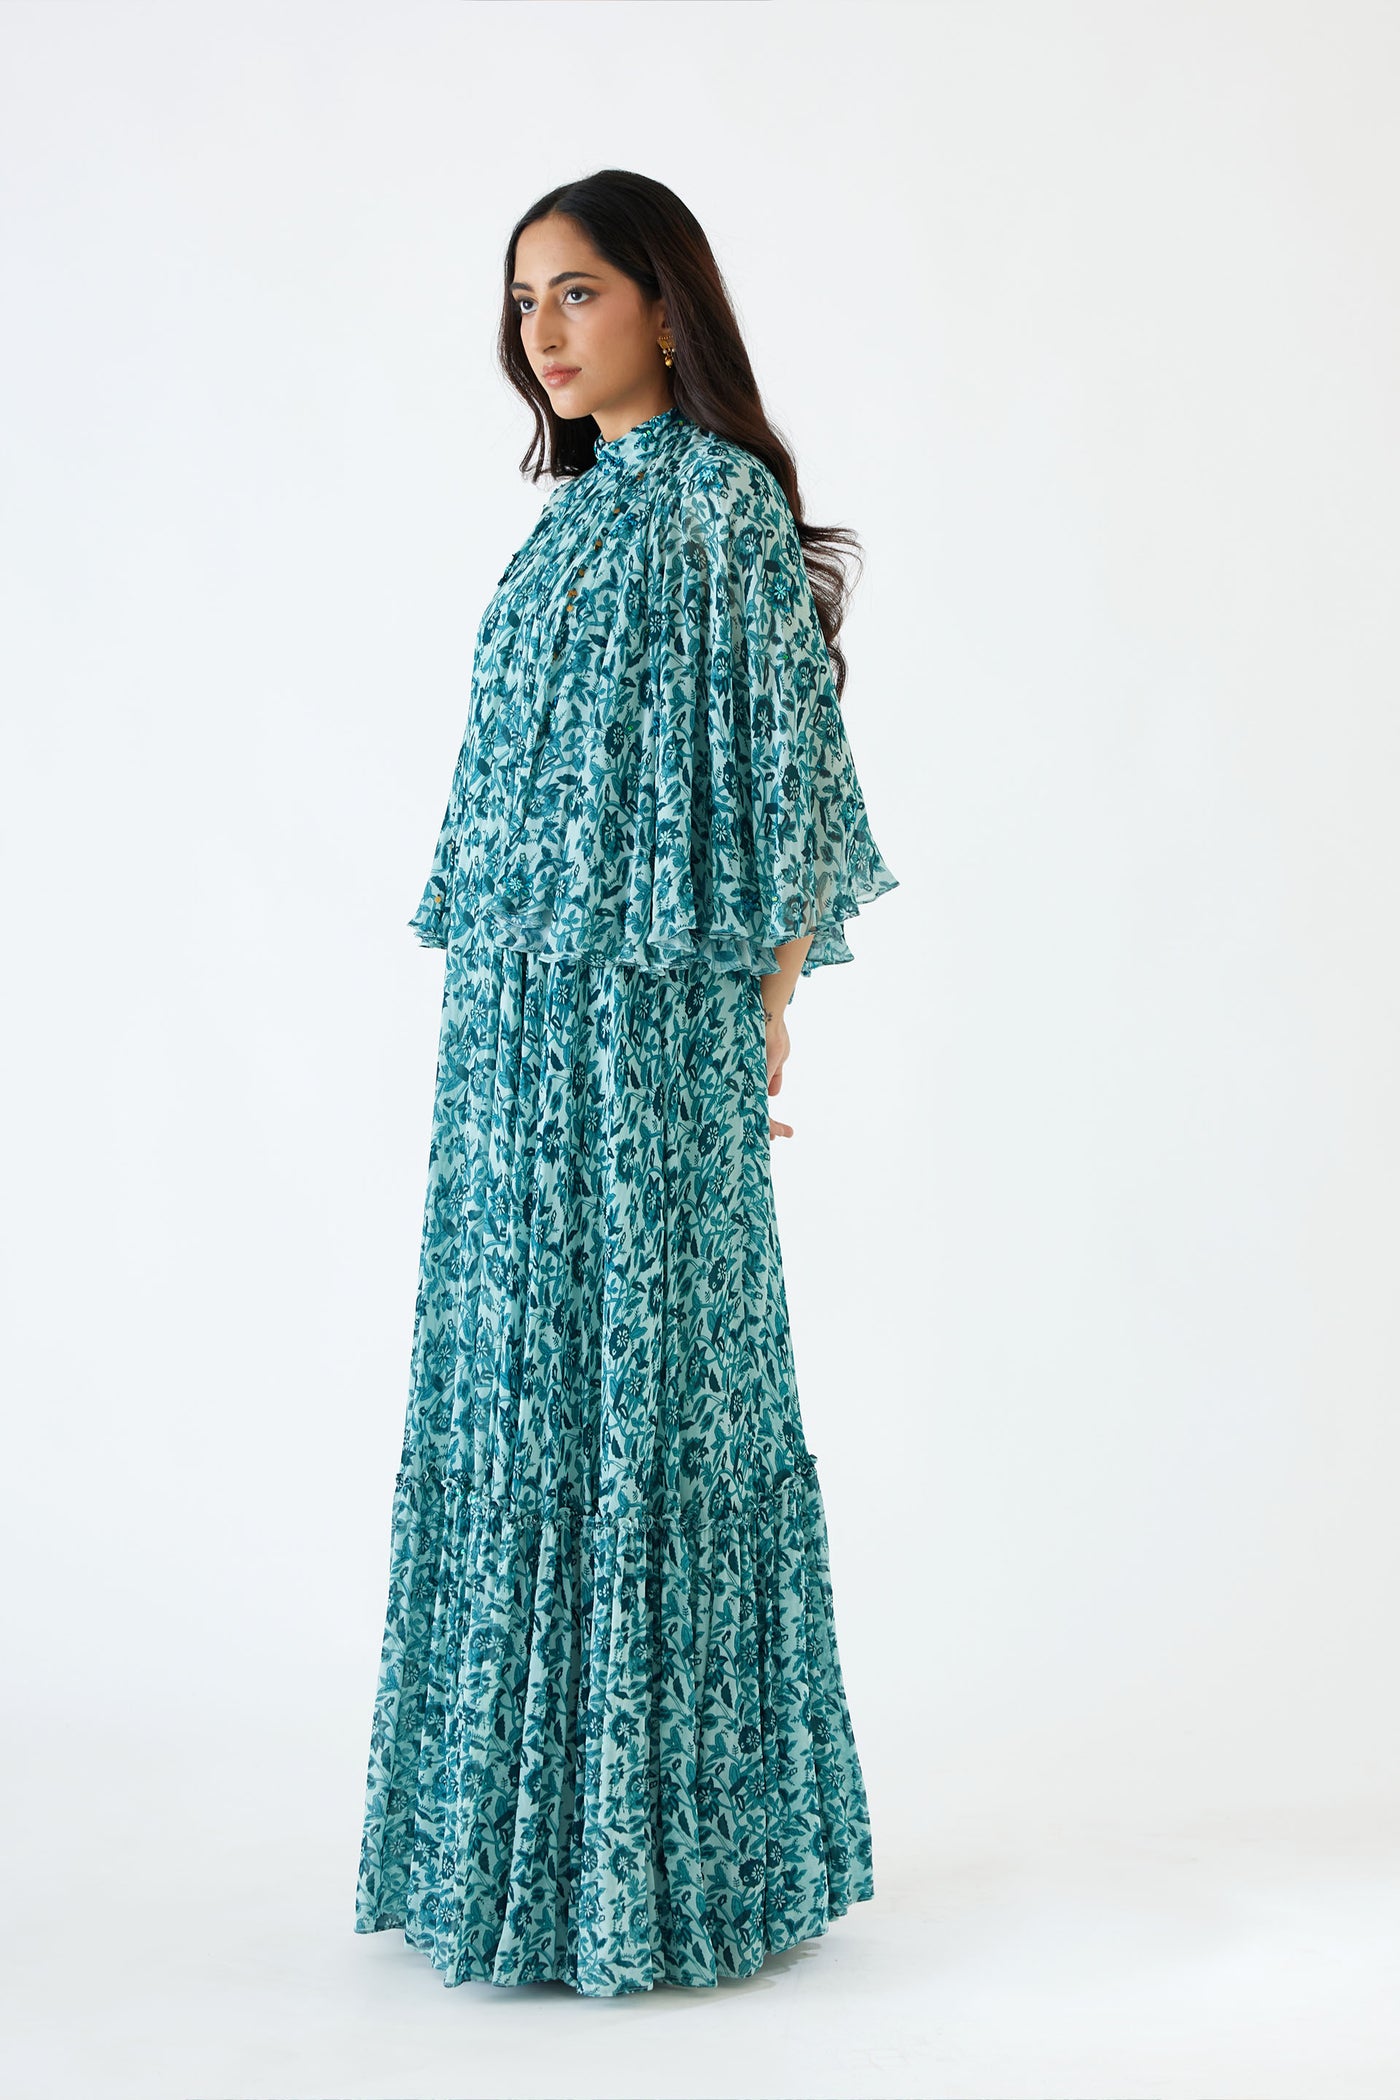 Nikasha Sea Blue And Turquiose Floral Printed Cape Dress Set blue festive indian designer wear online shopping melange singapore